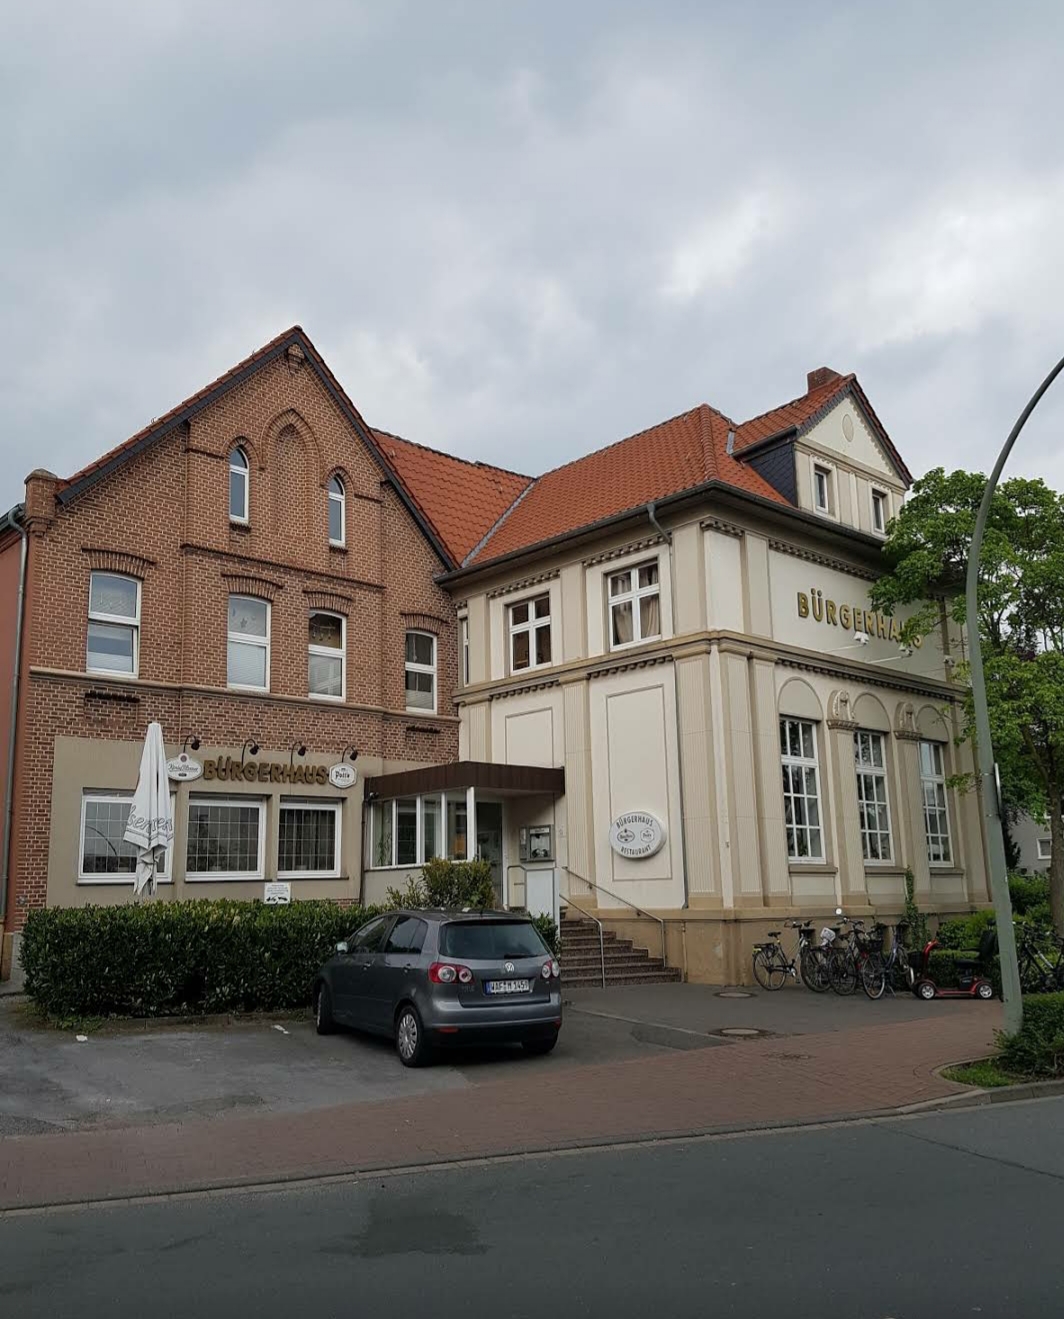 Bürgerhaus
59302 Oelde